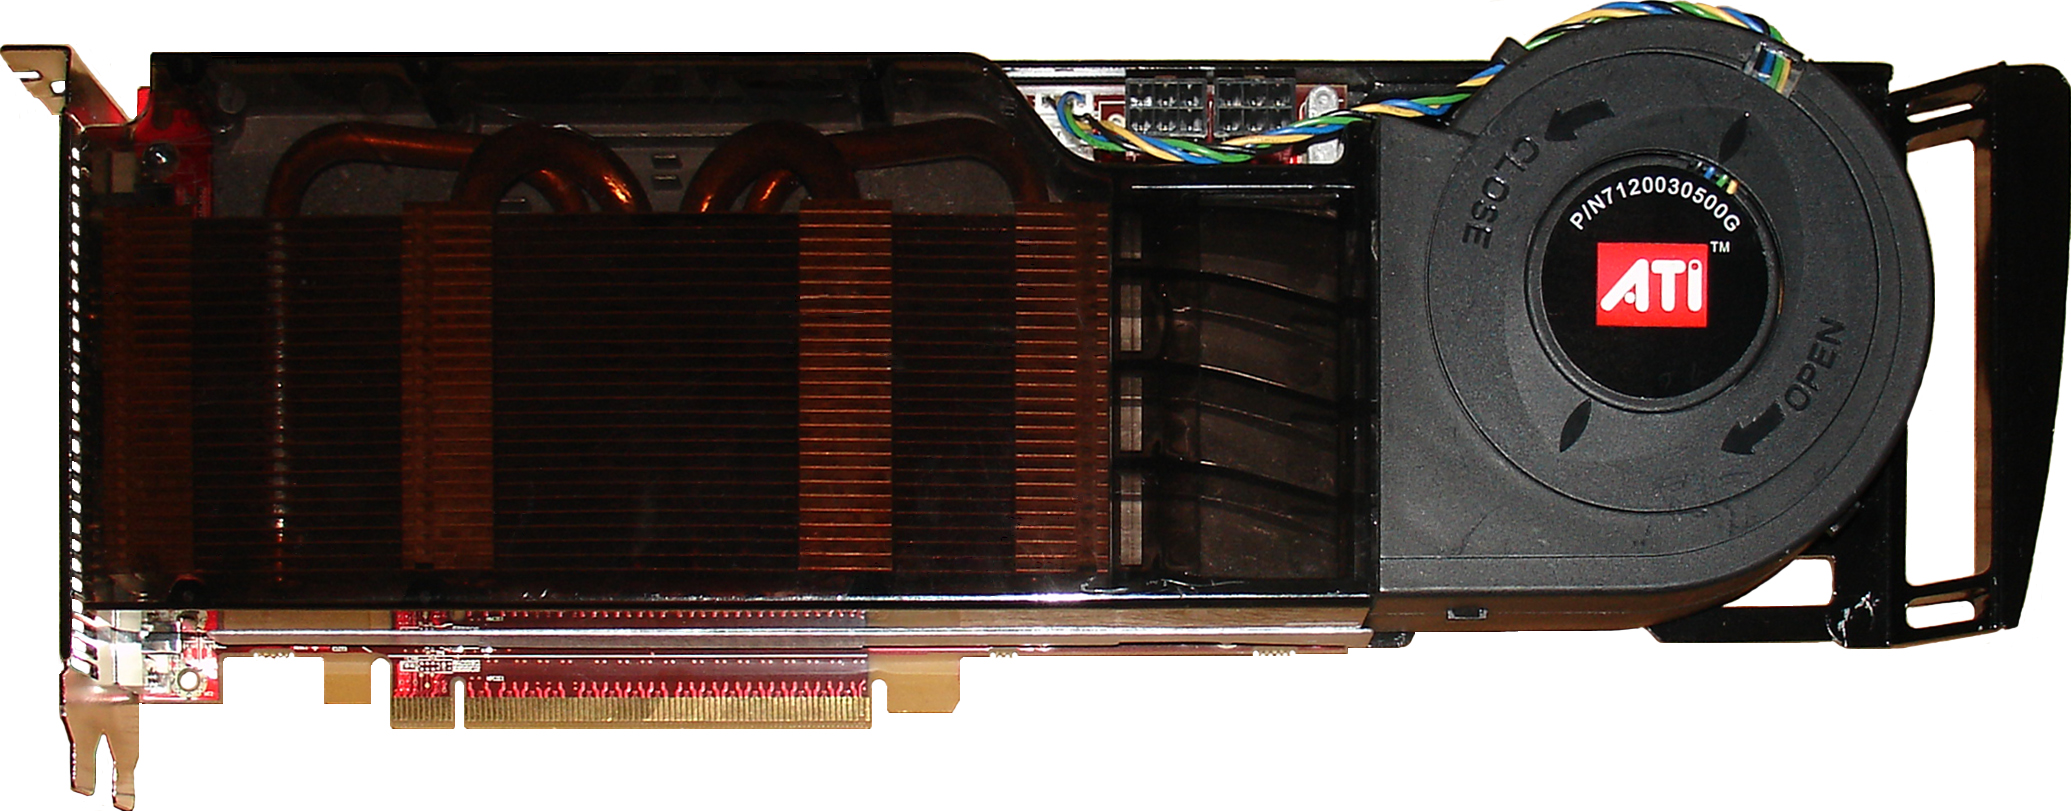 ATi Radeon HD 2900 XTX PCI-E 512MB 512Bit GDDR3 Rev_A0 0639 Engineering Sample top (1).JPG